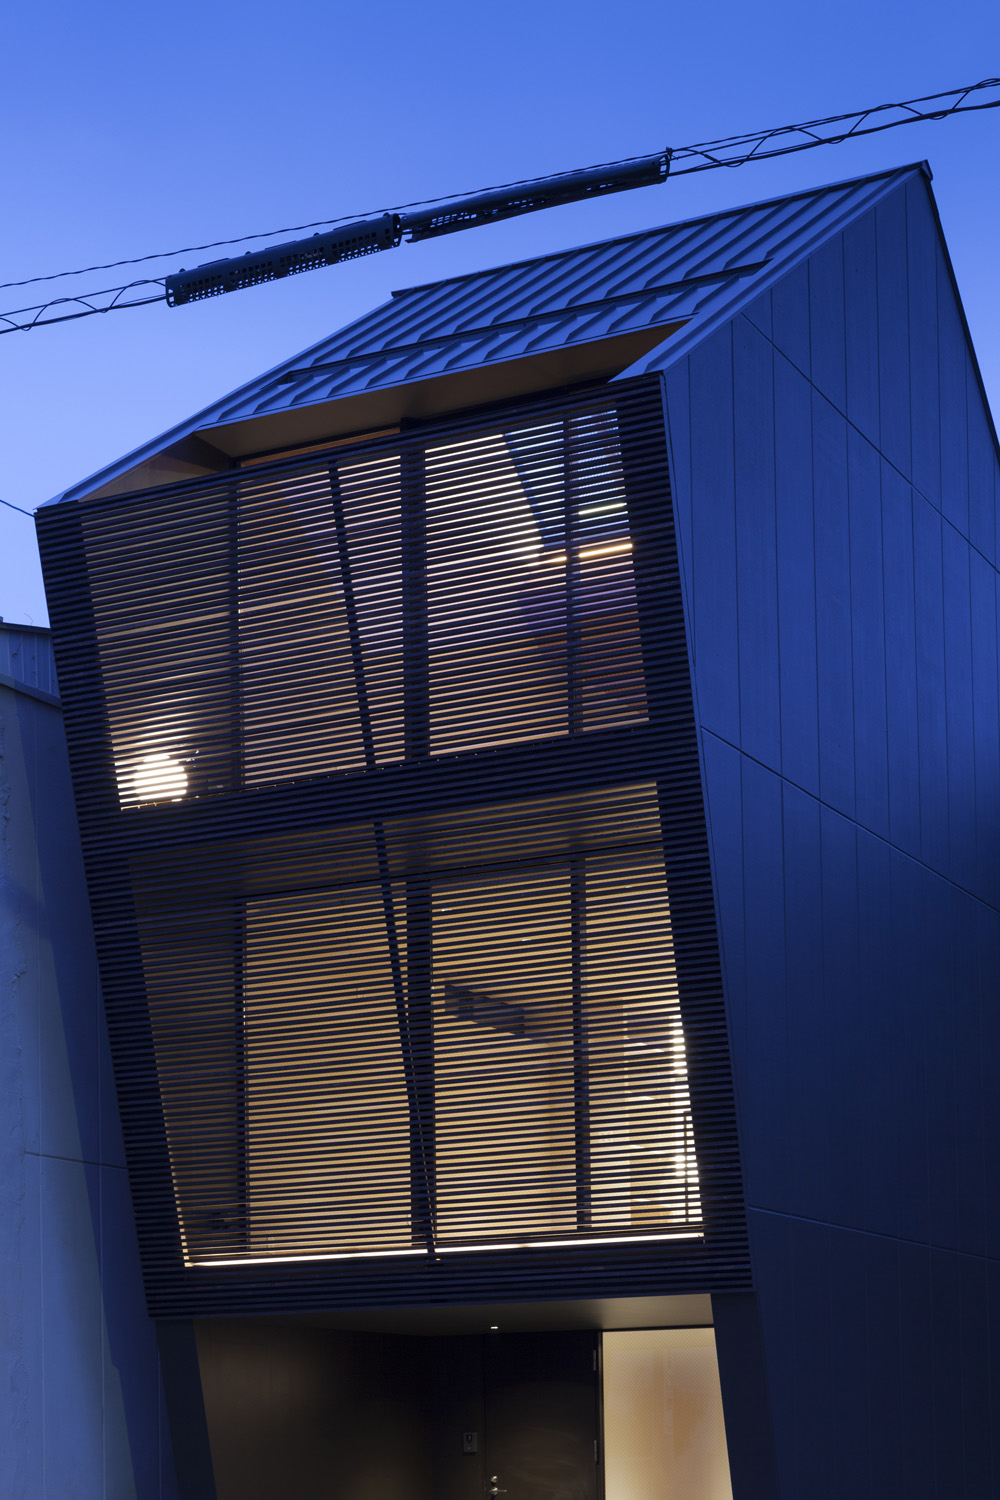 Nest by APOLLO Architects & Associates